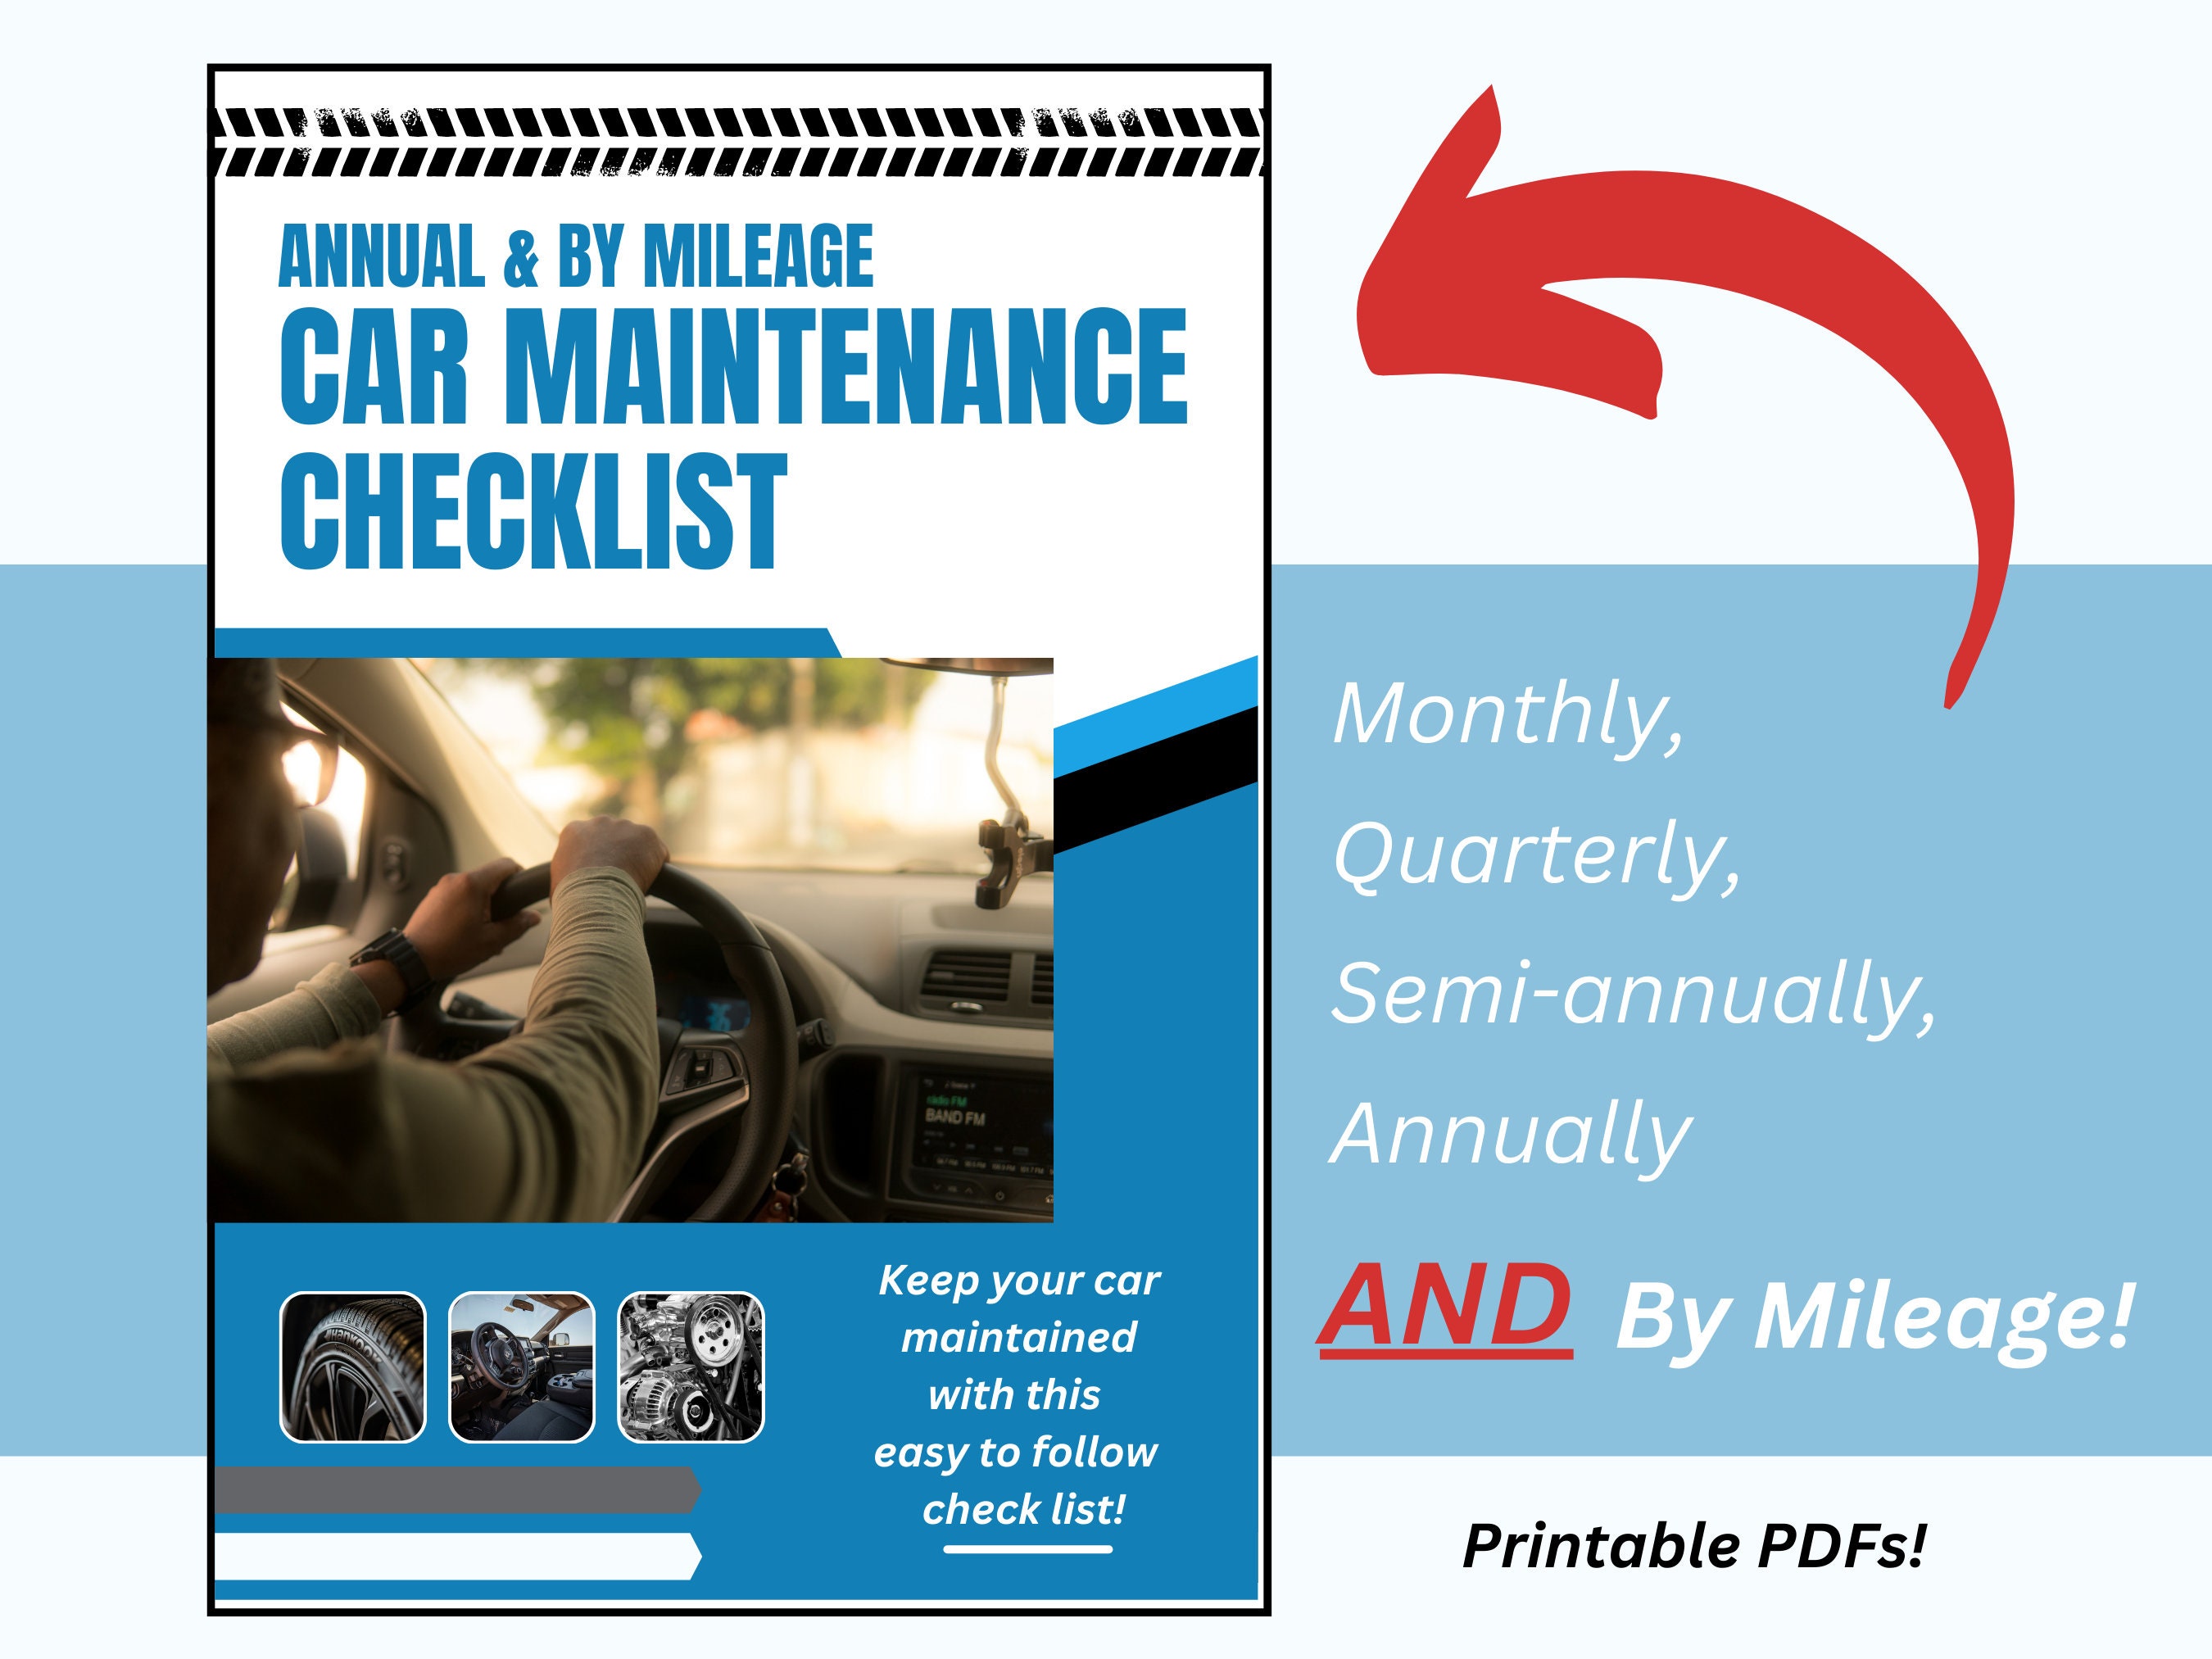 Car Wash List, Car Cleaning Tasks, Car Accessories for Men, Car Essentials,  Cleaning Checklist, Car Wash Service, Car Maintenance 